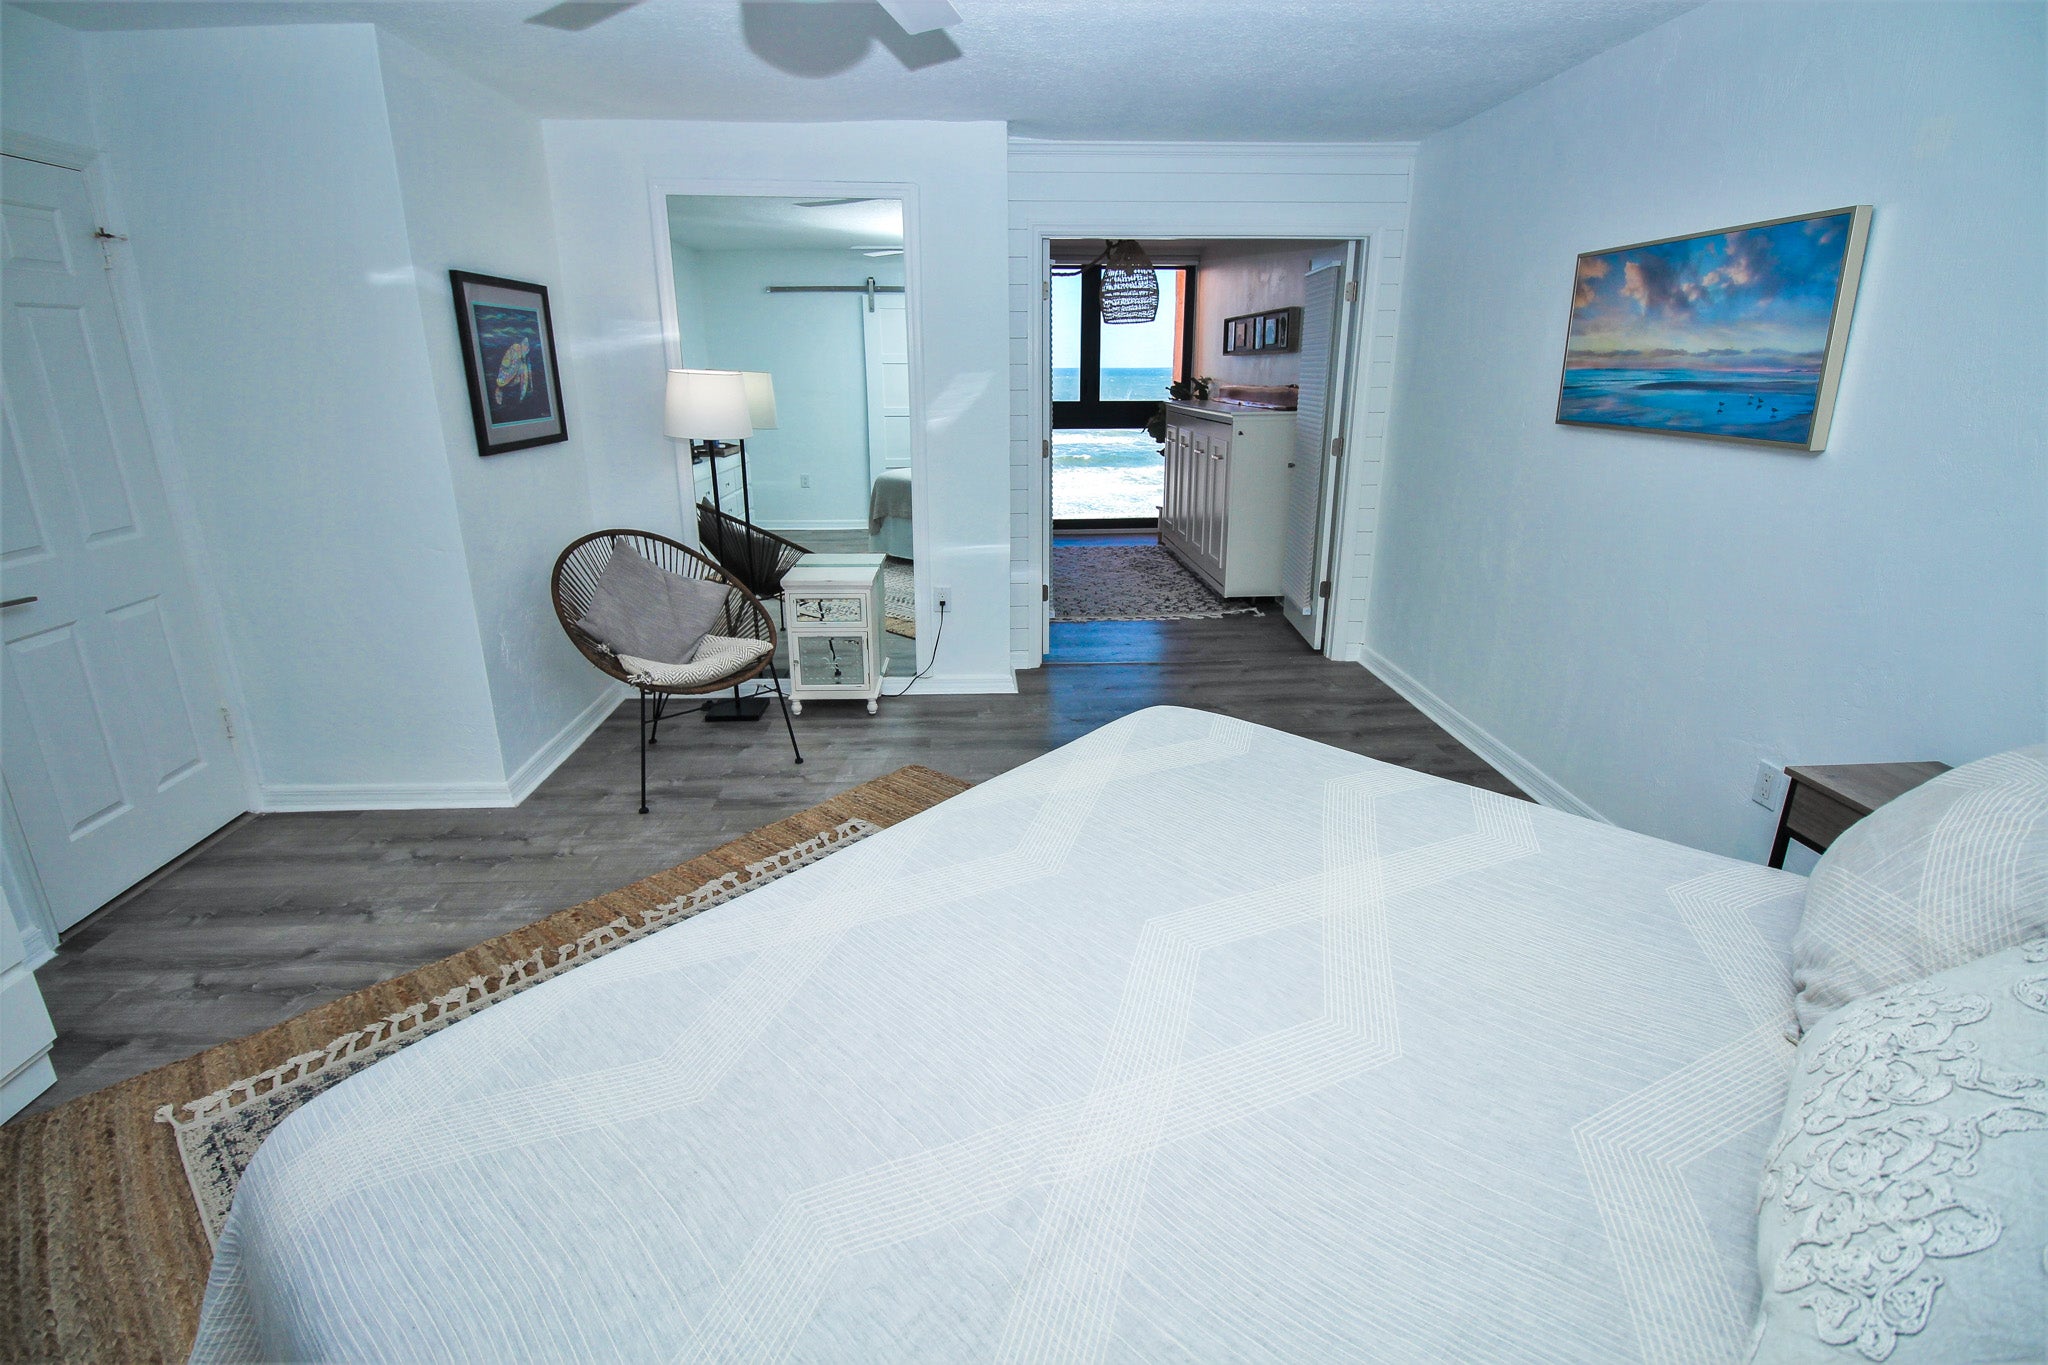 Primary bedroom has ocean view